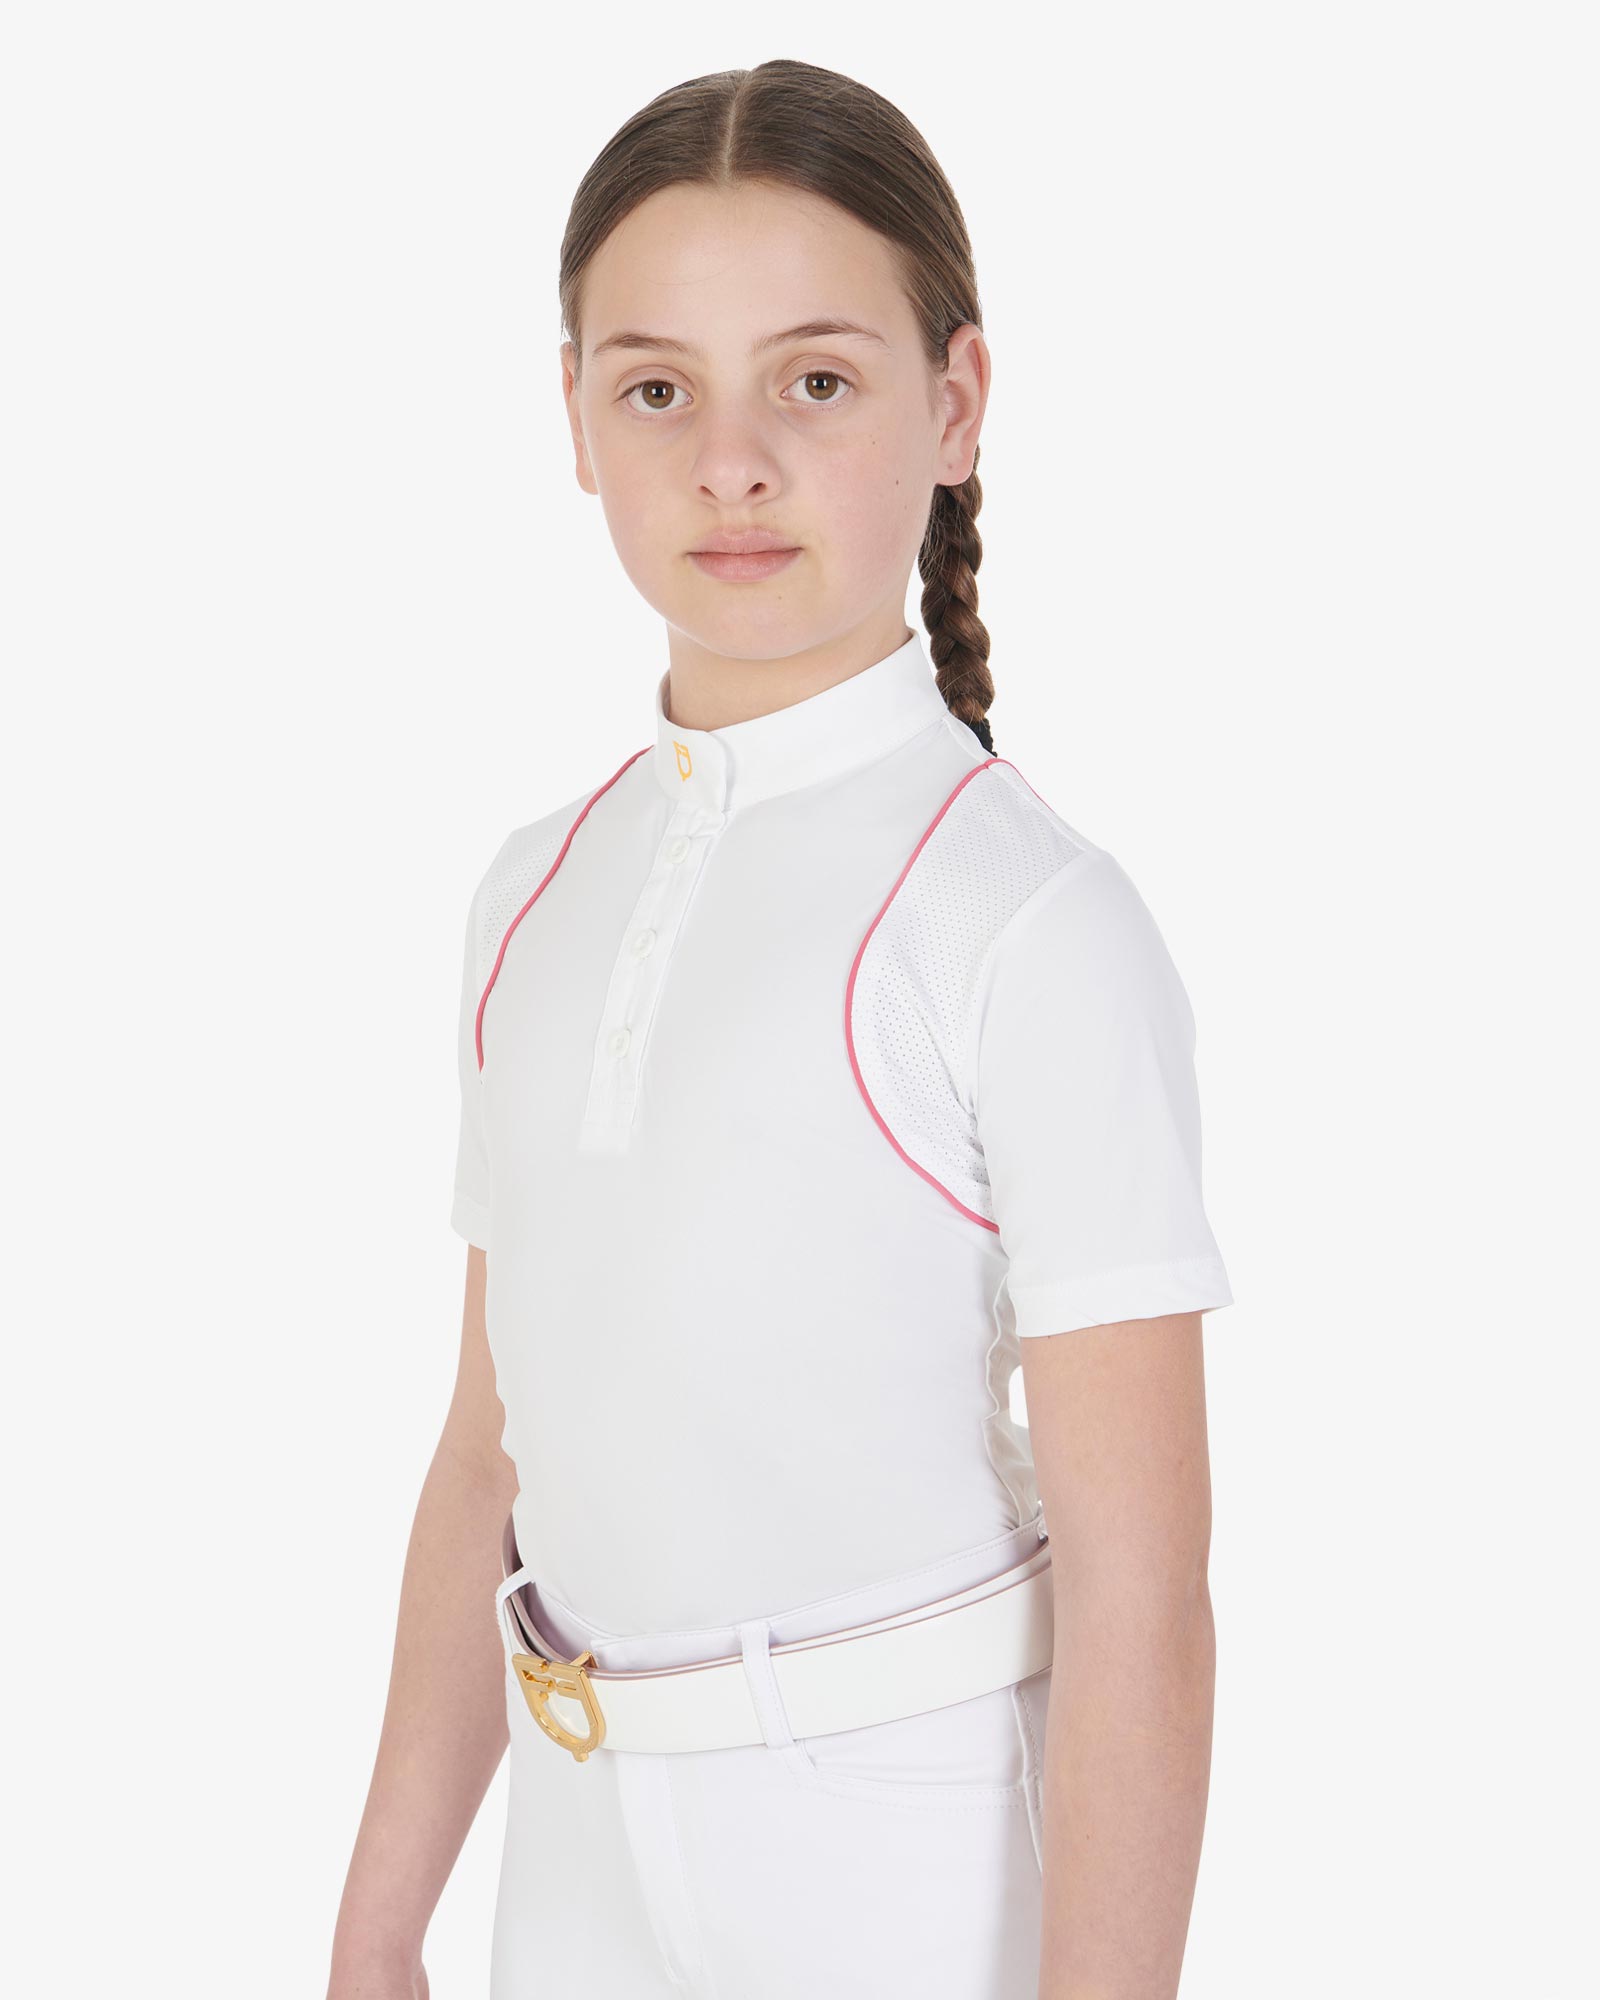 Girls' polo shirt in technical fabric | Shop | Equestro